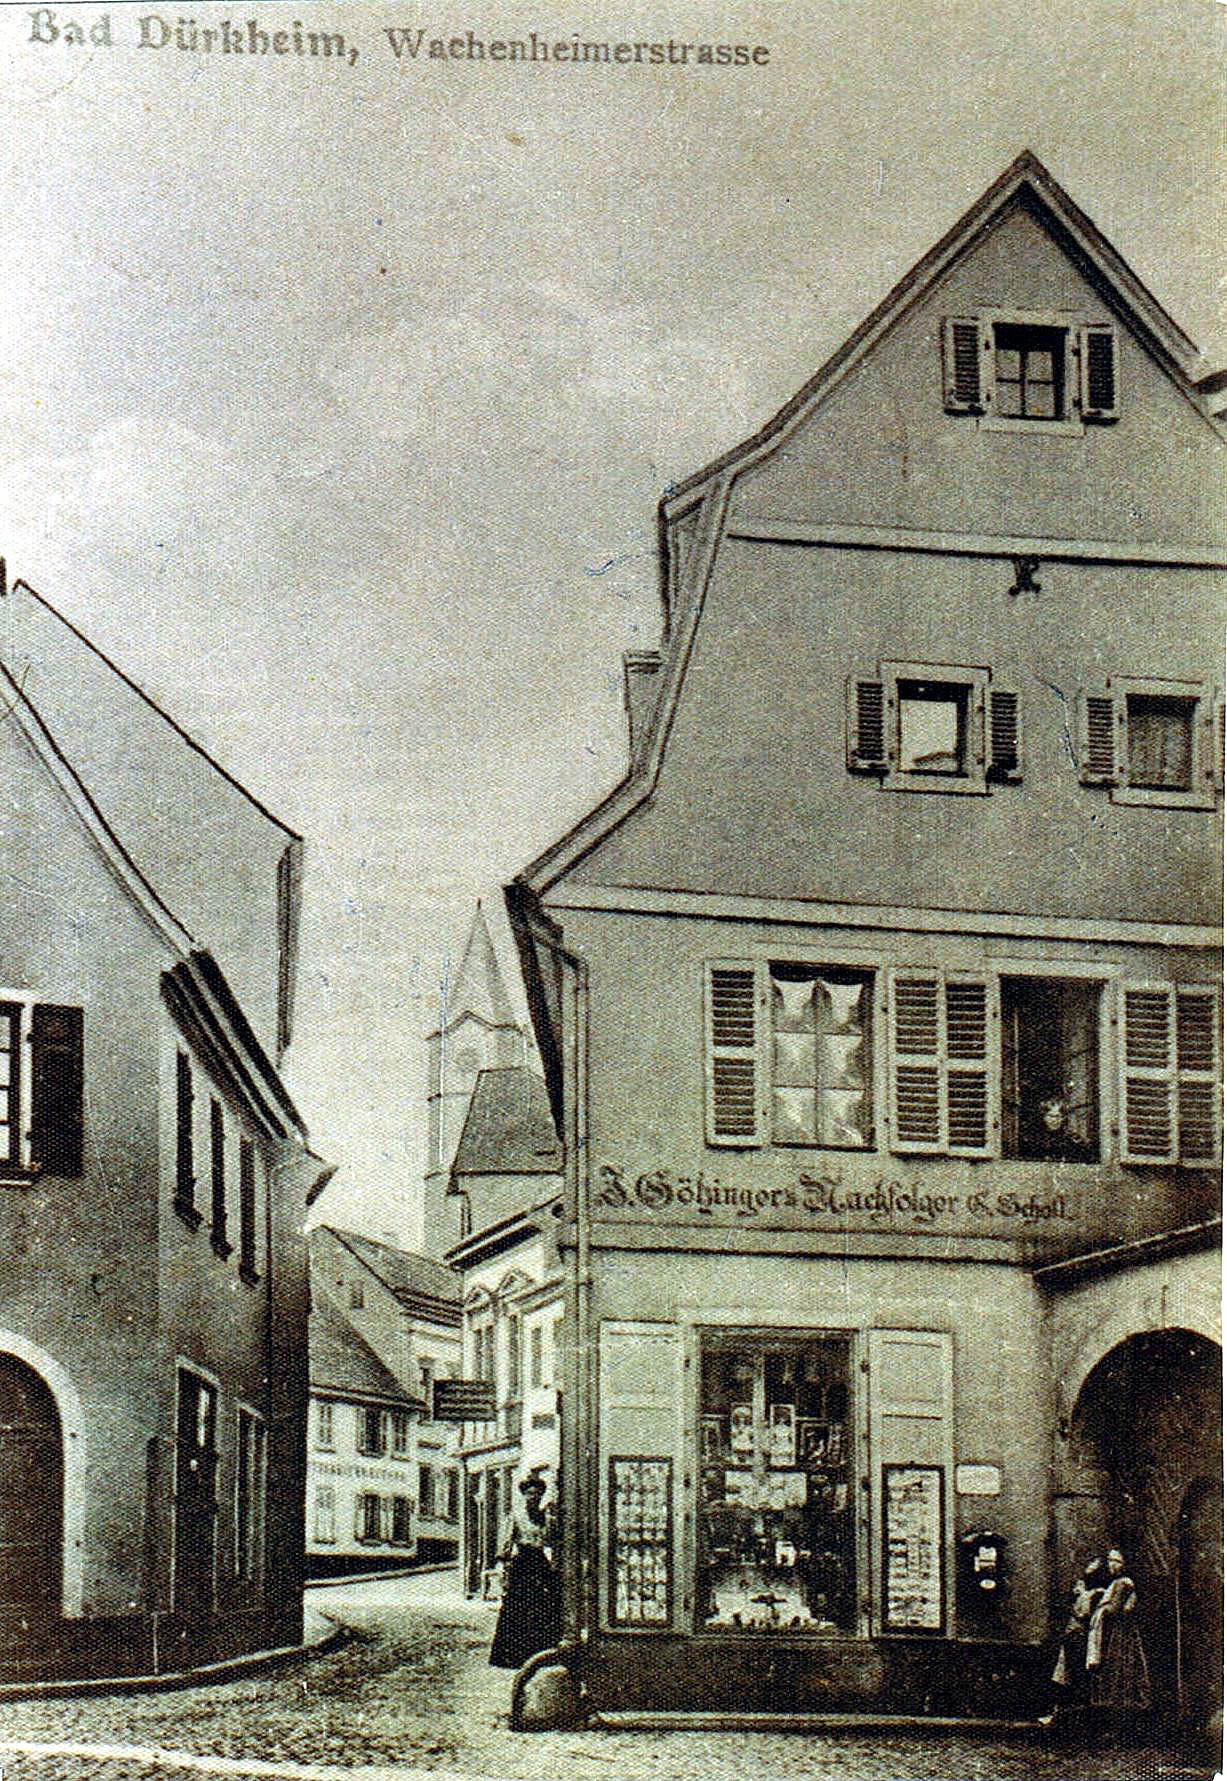 Foto-Sammlung Adolf Krapp, Ordner 5: Wachenheimer Straße (heute Stadtplatz), 1902 (Museumsgesellschaft Bad Dürkheim e.V. CC BY-NC-SA)